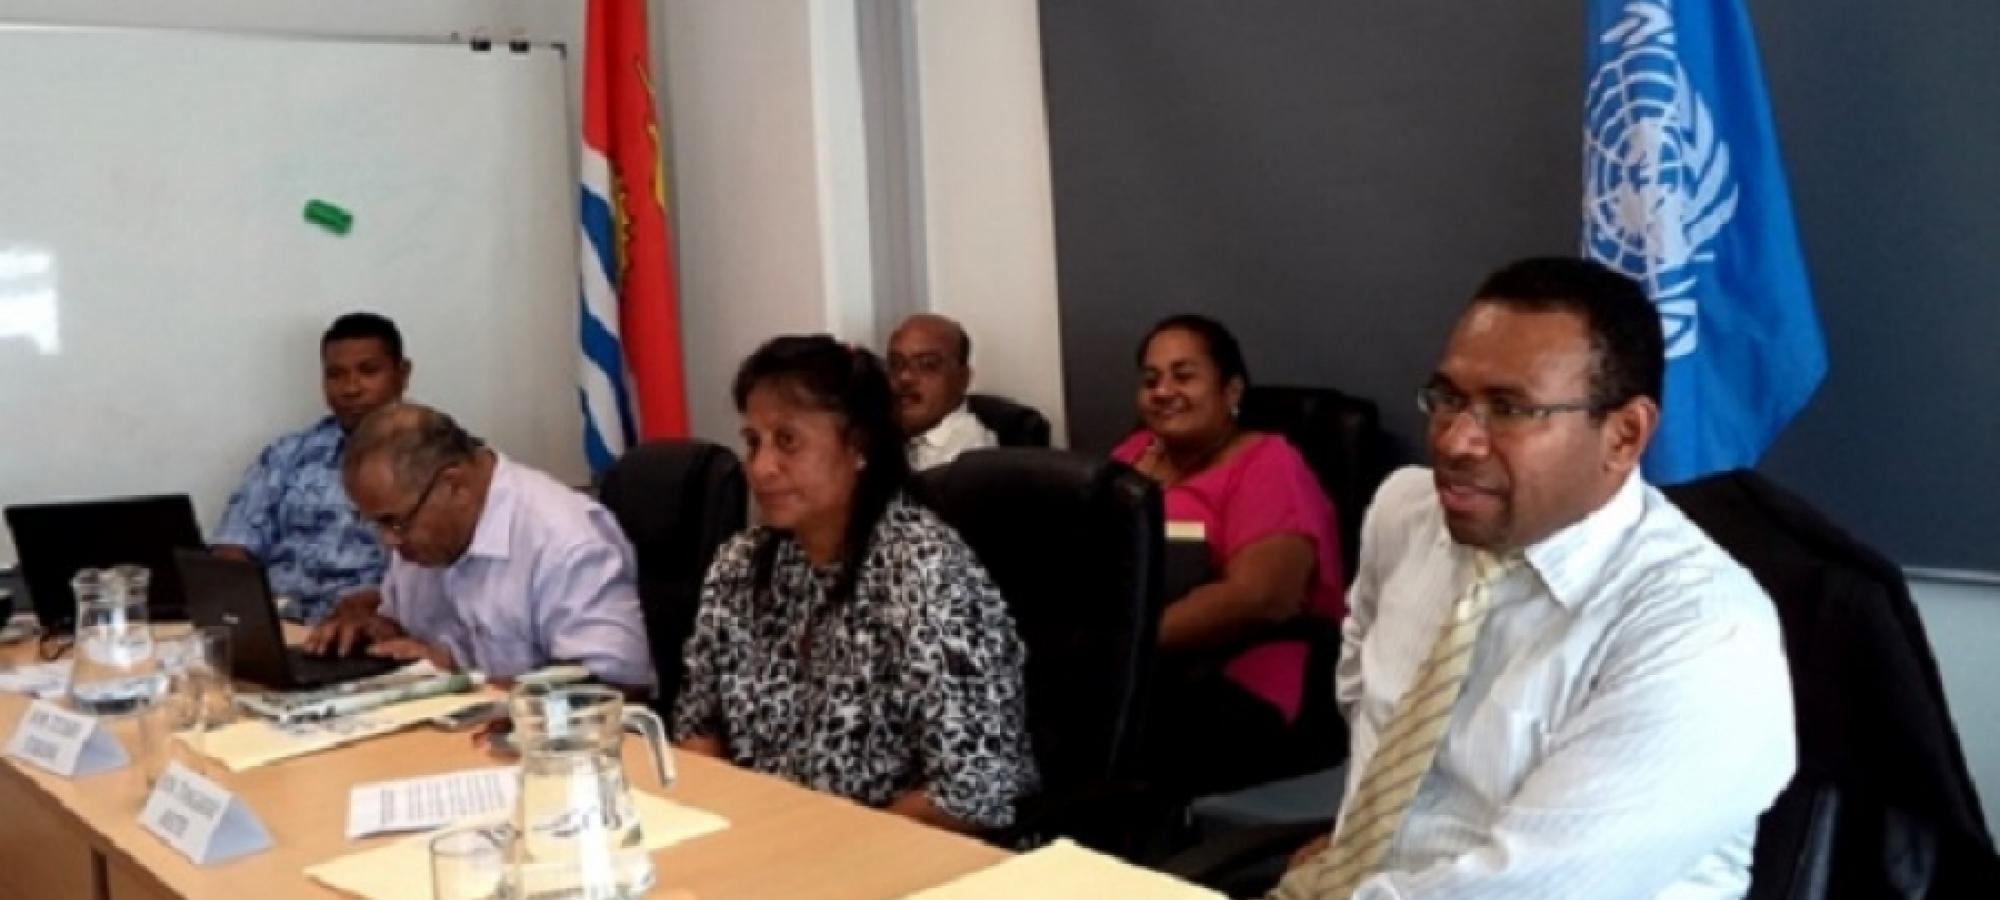 Mock session prepares Kiribati for report to UN Human Rights Council